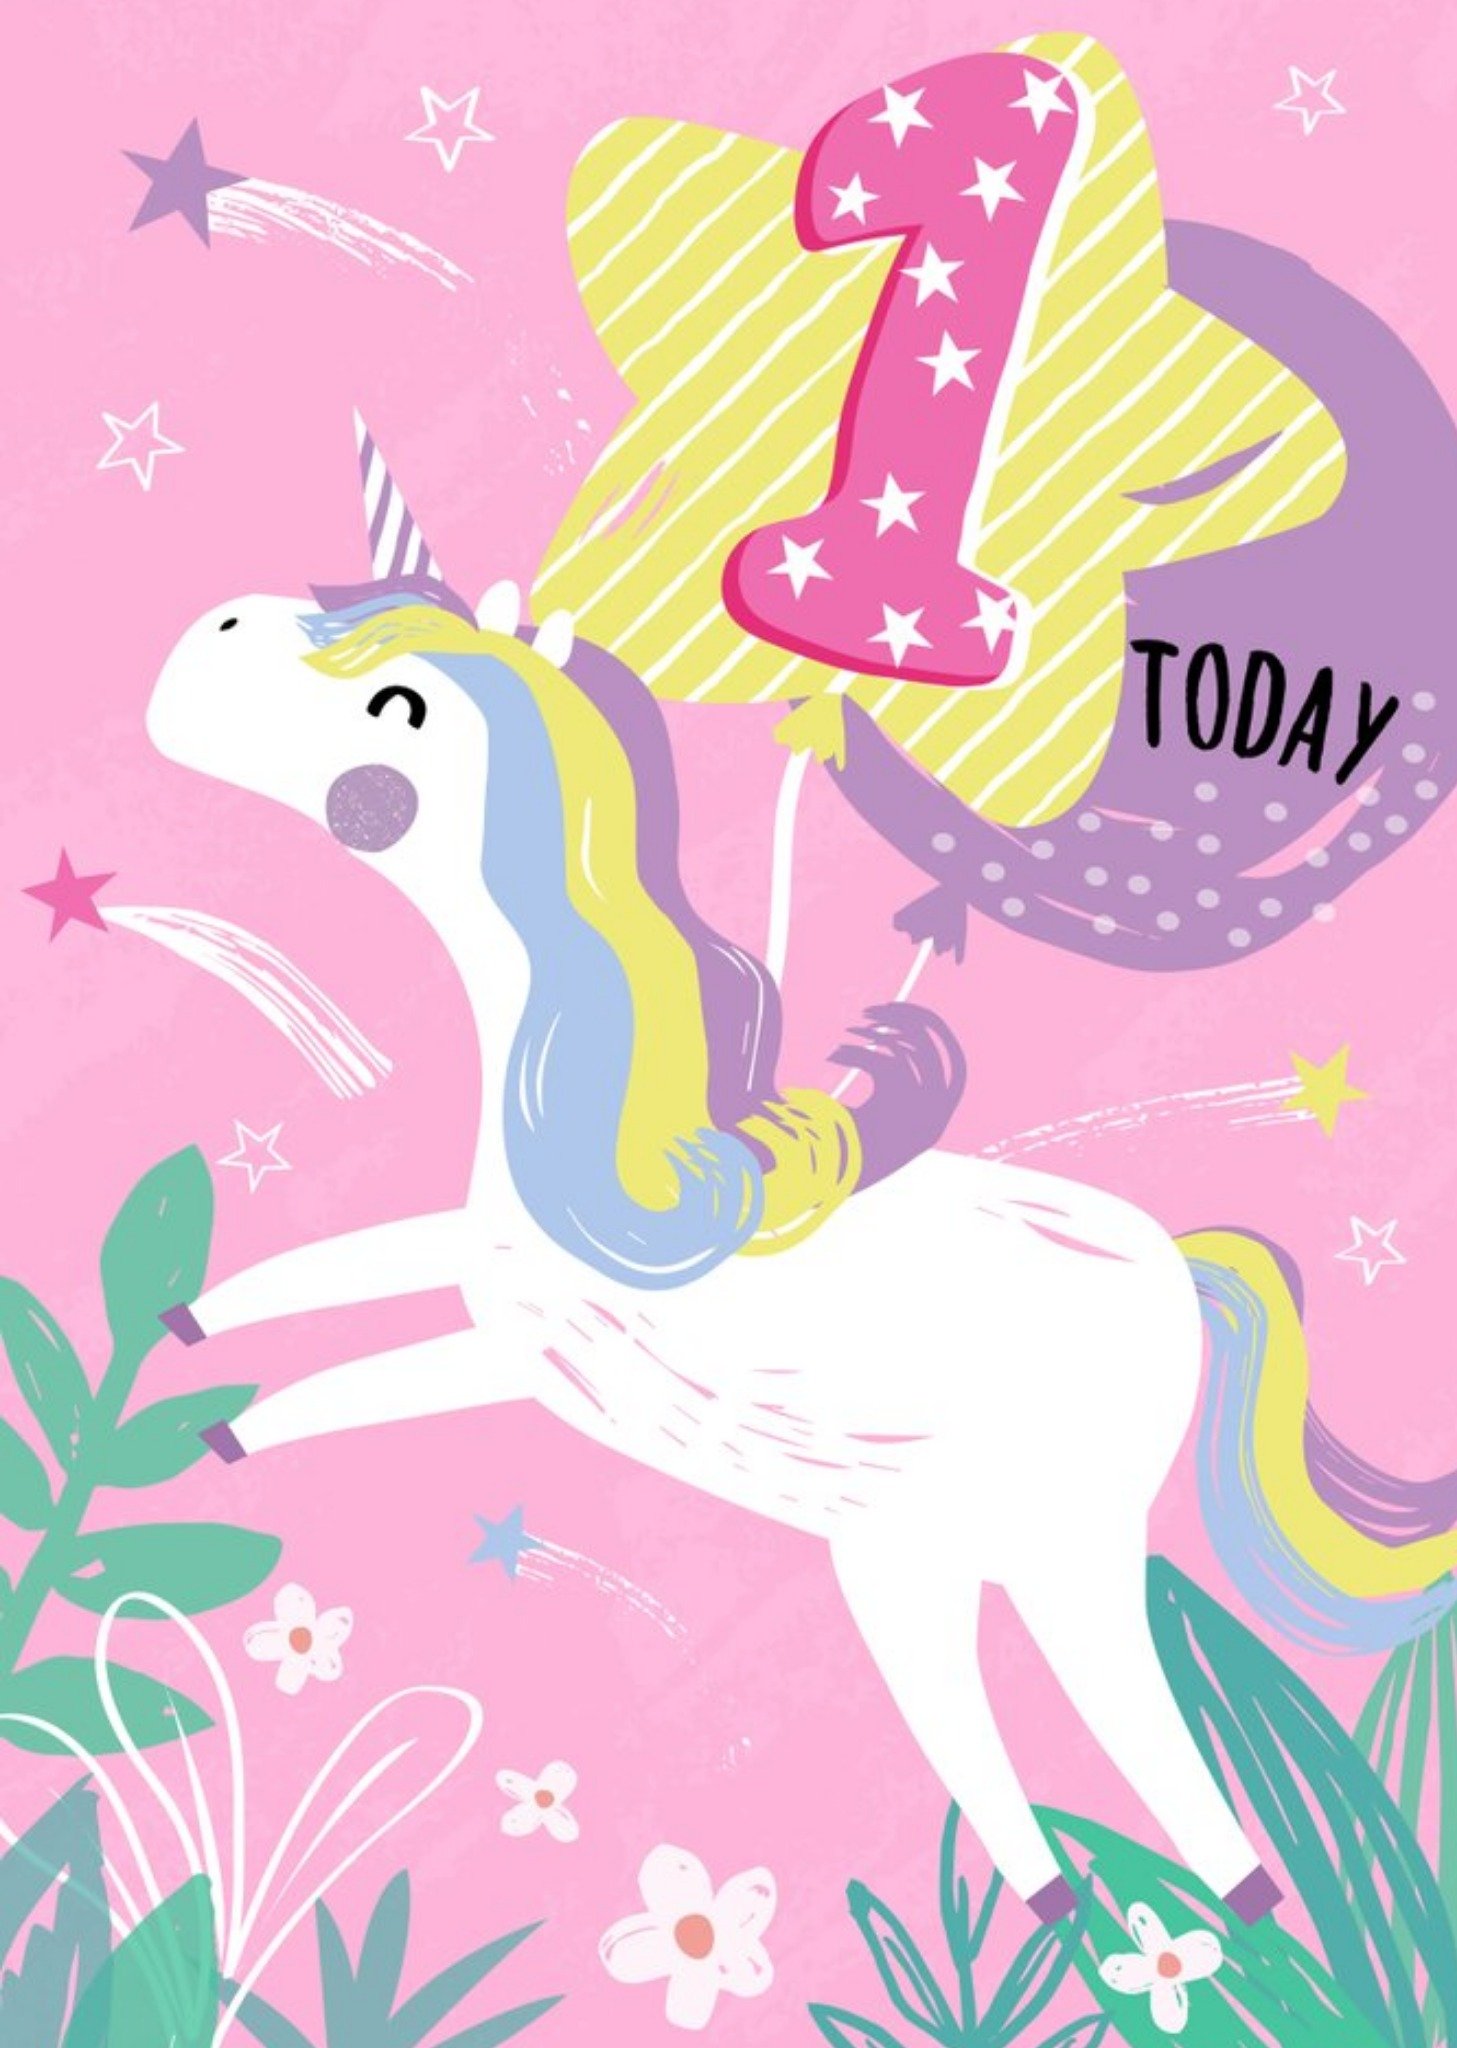 Moonpig Cute Illustrated Unicorn 1 Today Birthday Card Ecard